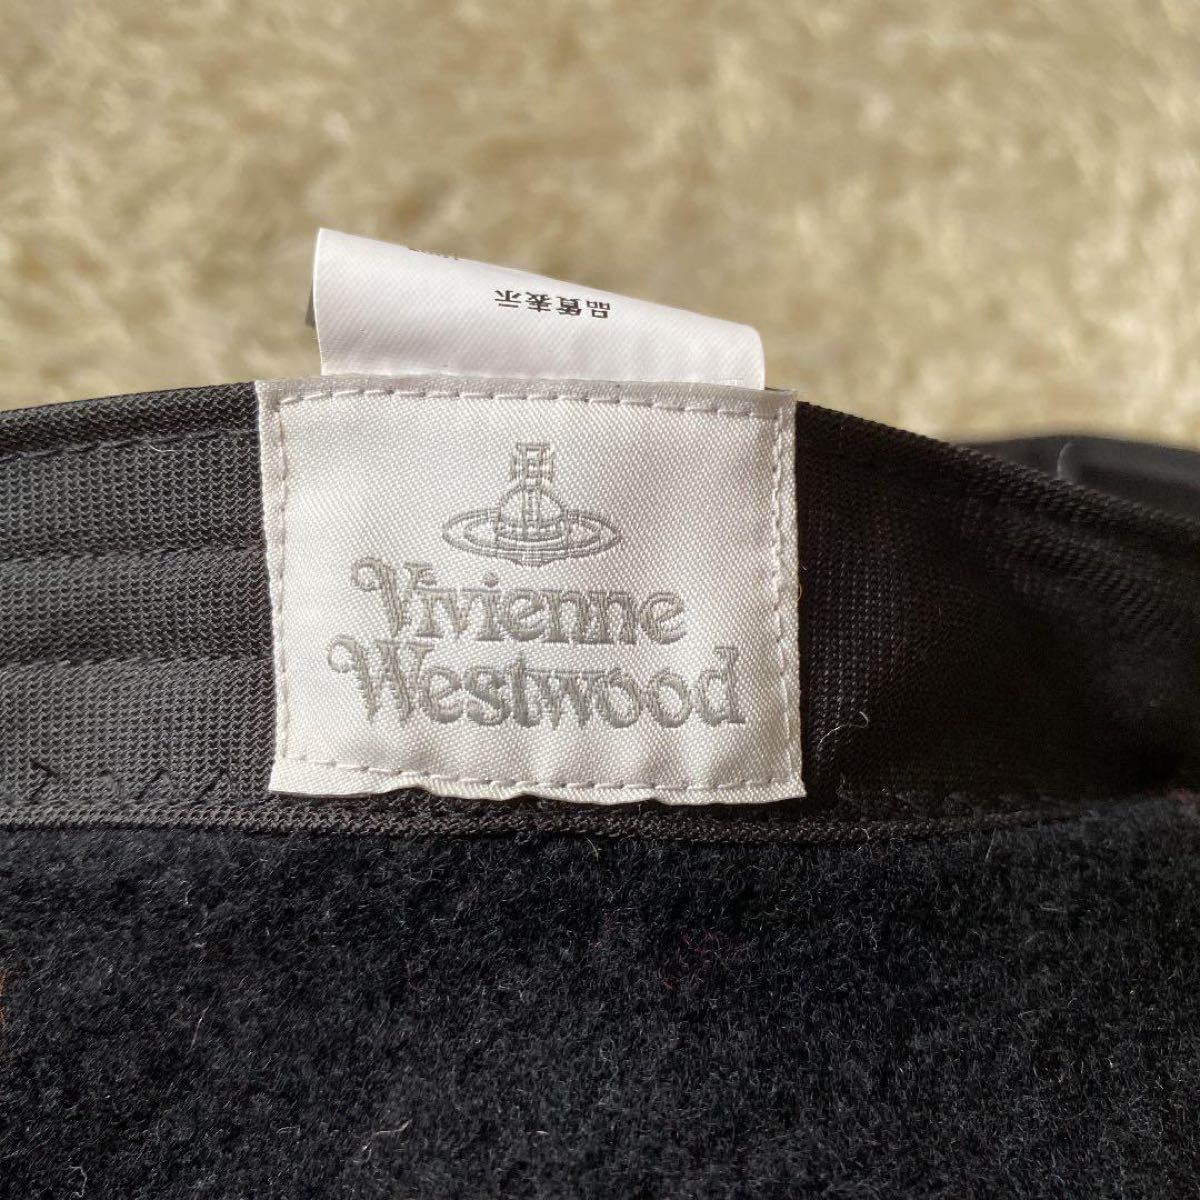 Vivienne Westwood ヴィヴィアンウエストウッド ベレー帽 オーブ ウール ブラウン ブラック 茶色 黒 S M